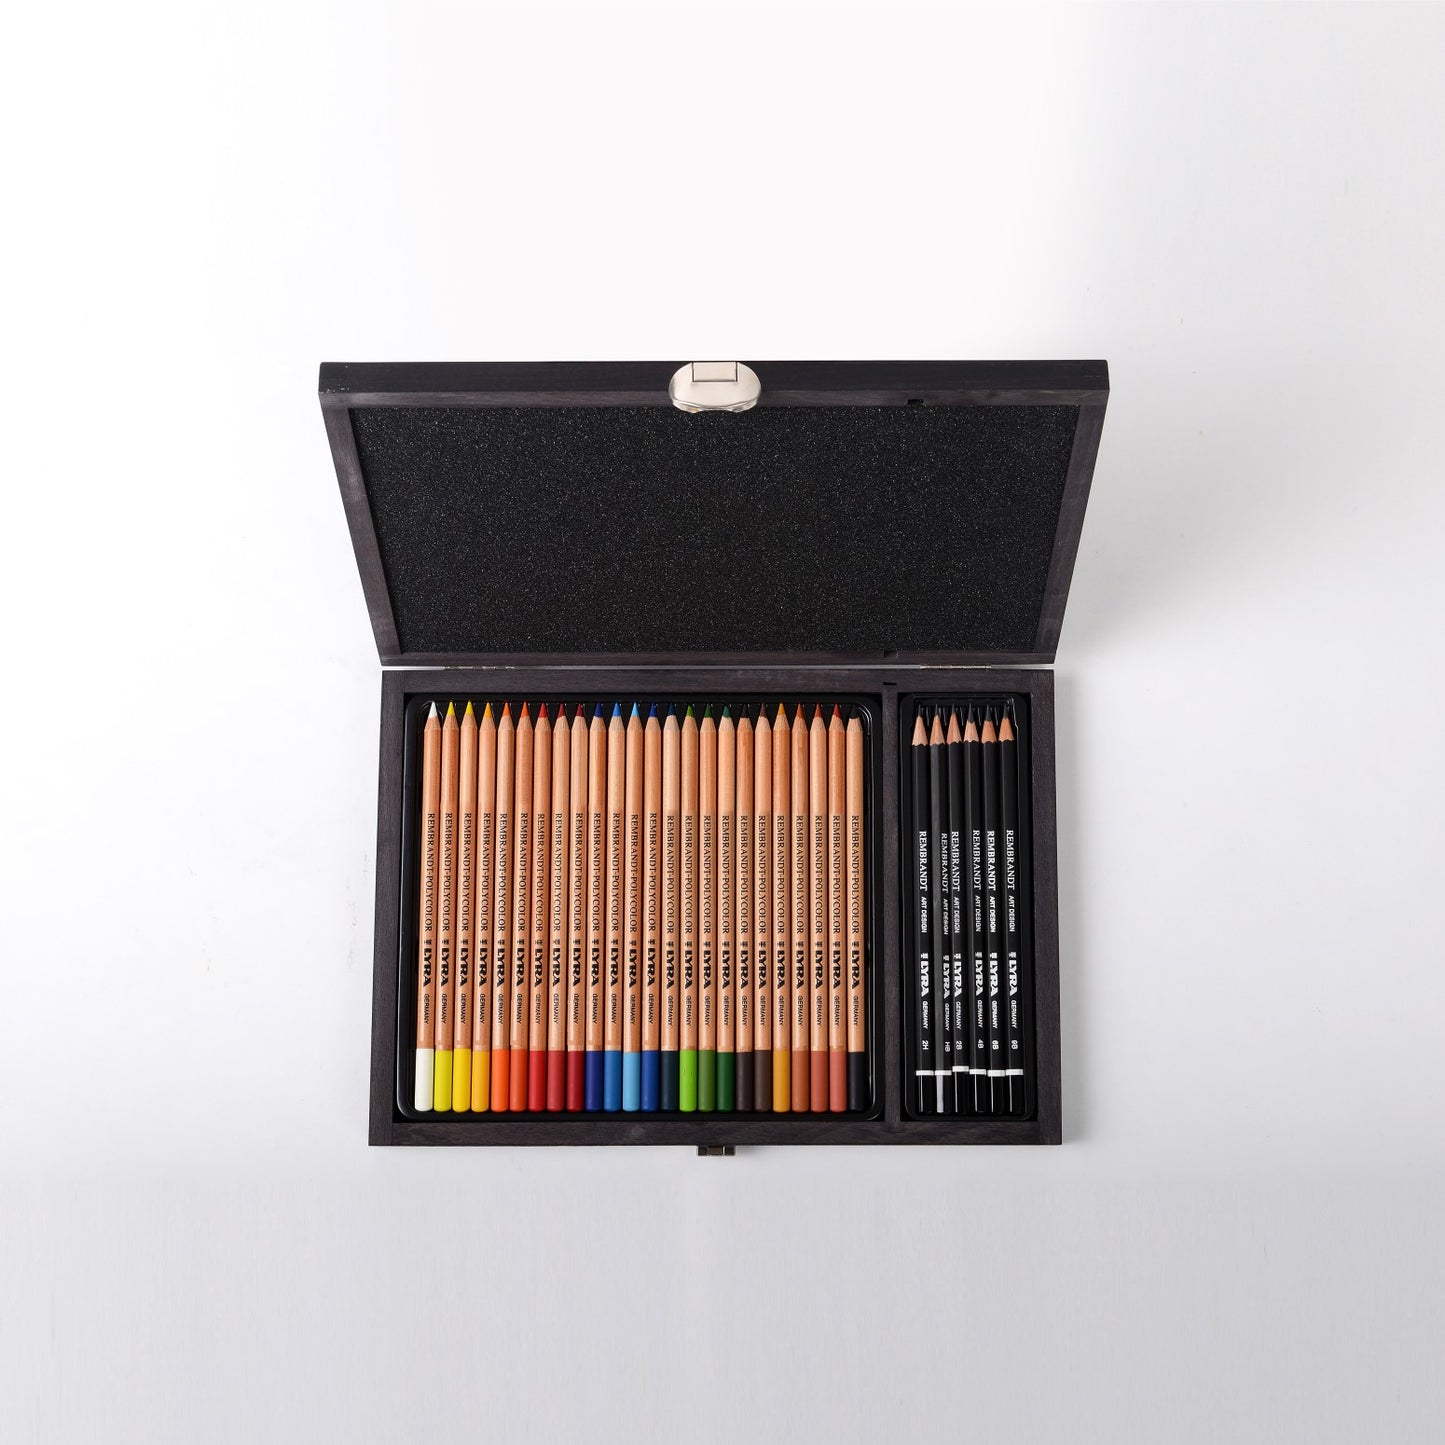 Lyra Polycolor & Design pencils in Wood Box L2004002